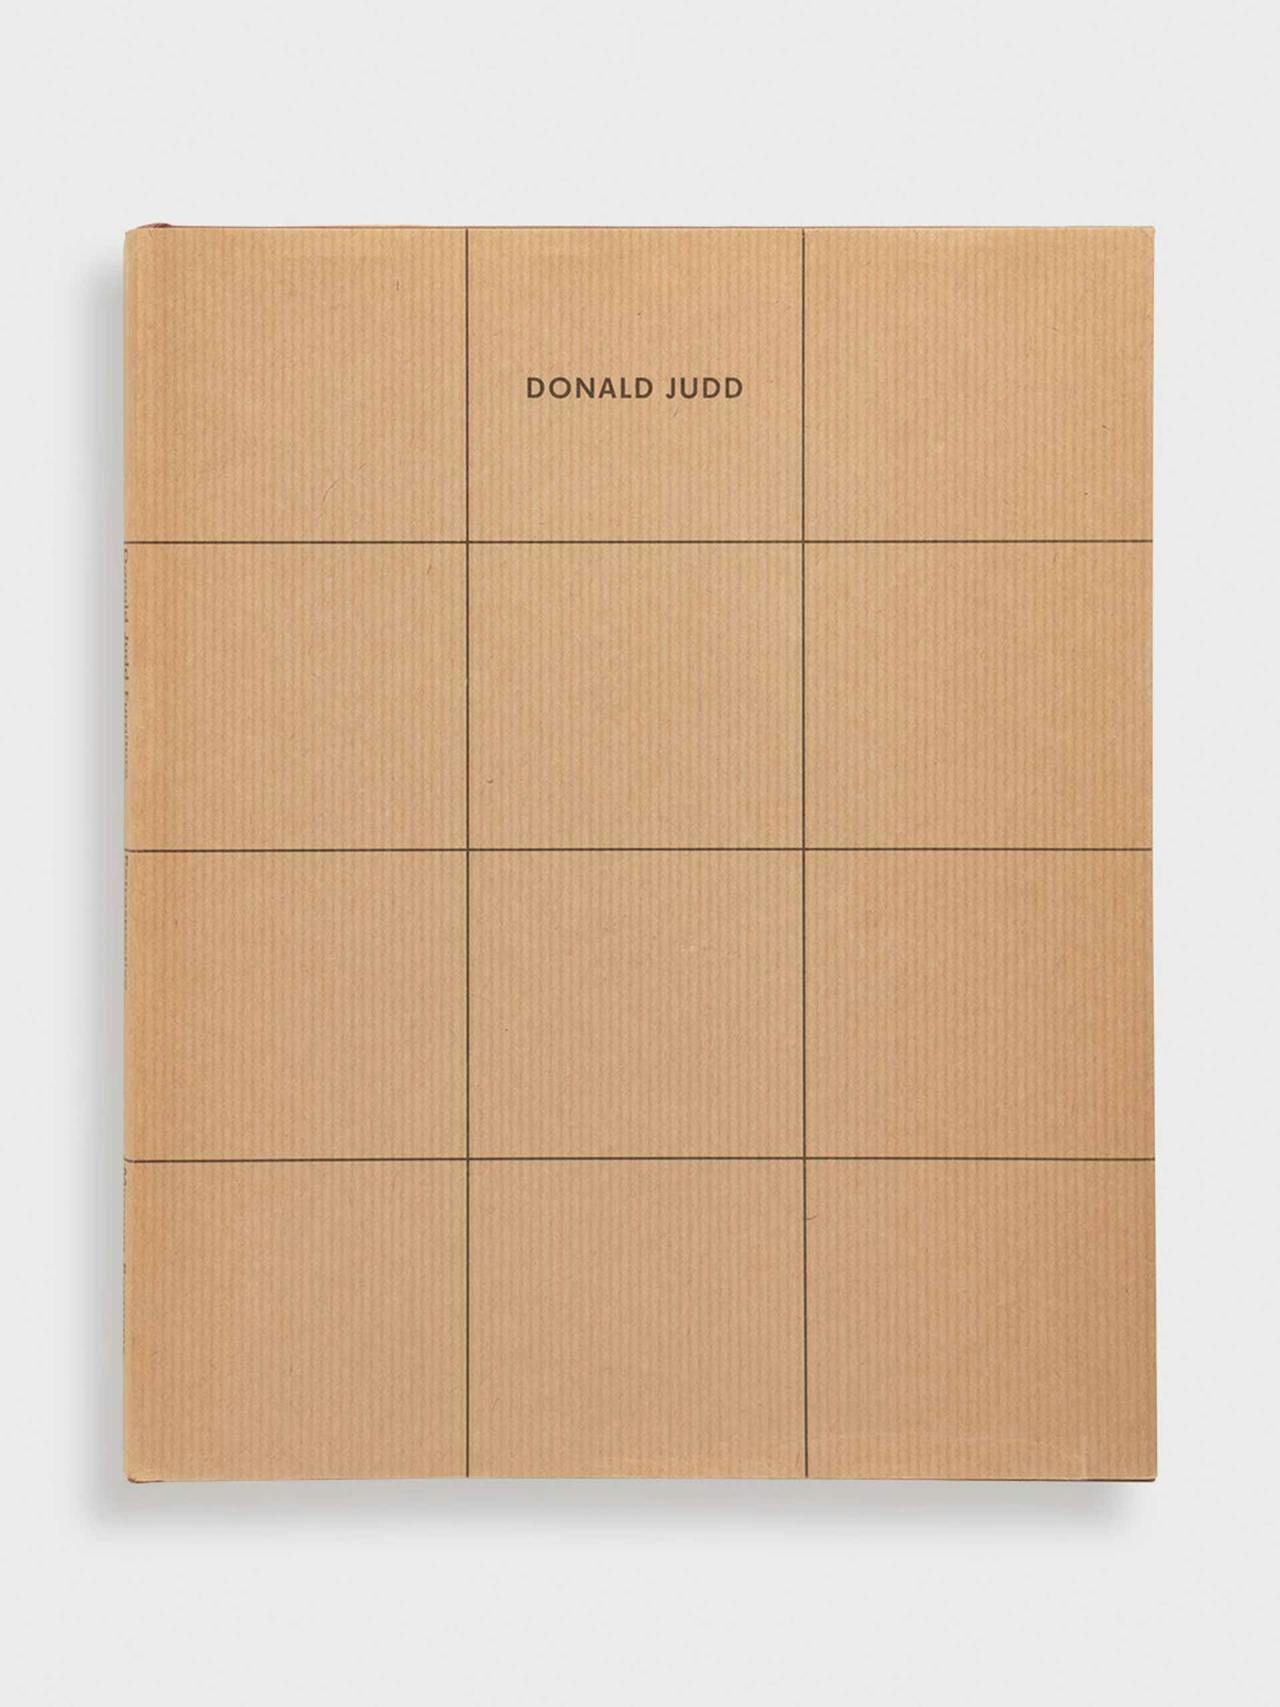 Image: Donald Judd furniture retrospective catalogue, 1993